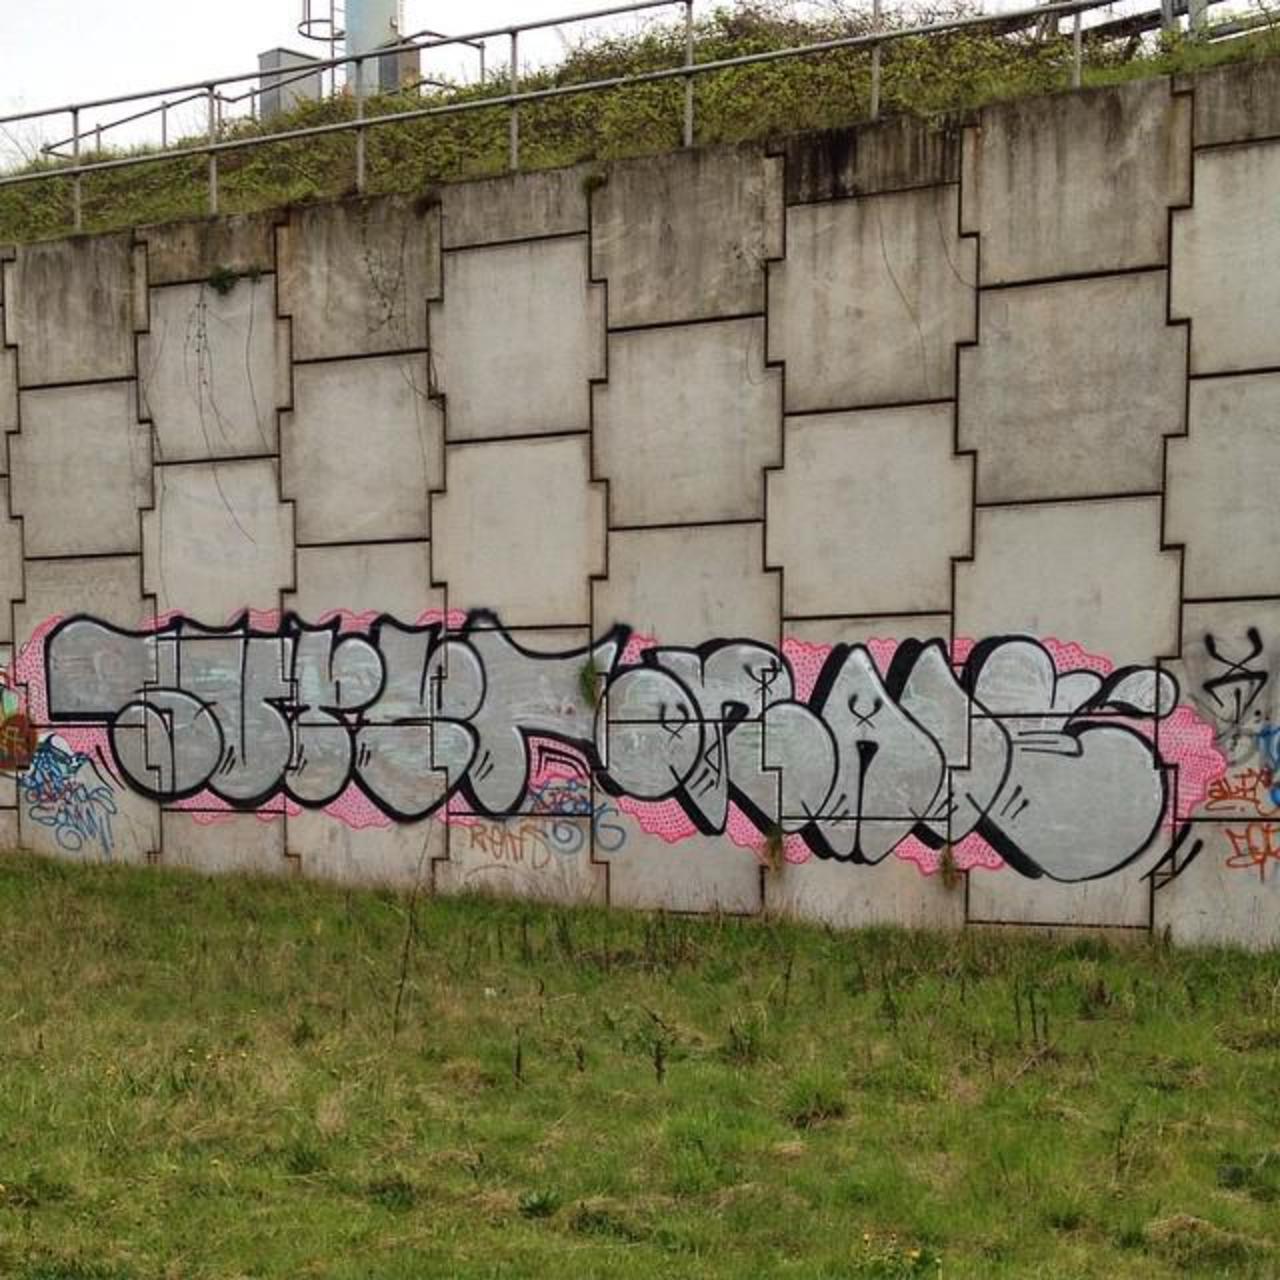 #Graffspotting #PhotoGraff #coleshill #graffiti #streetart #footslap #notmine by westmidzgraffiti http://t.co/s8kzzn3yRX